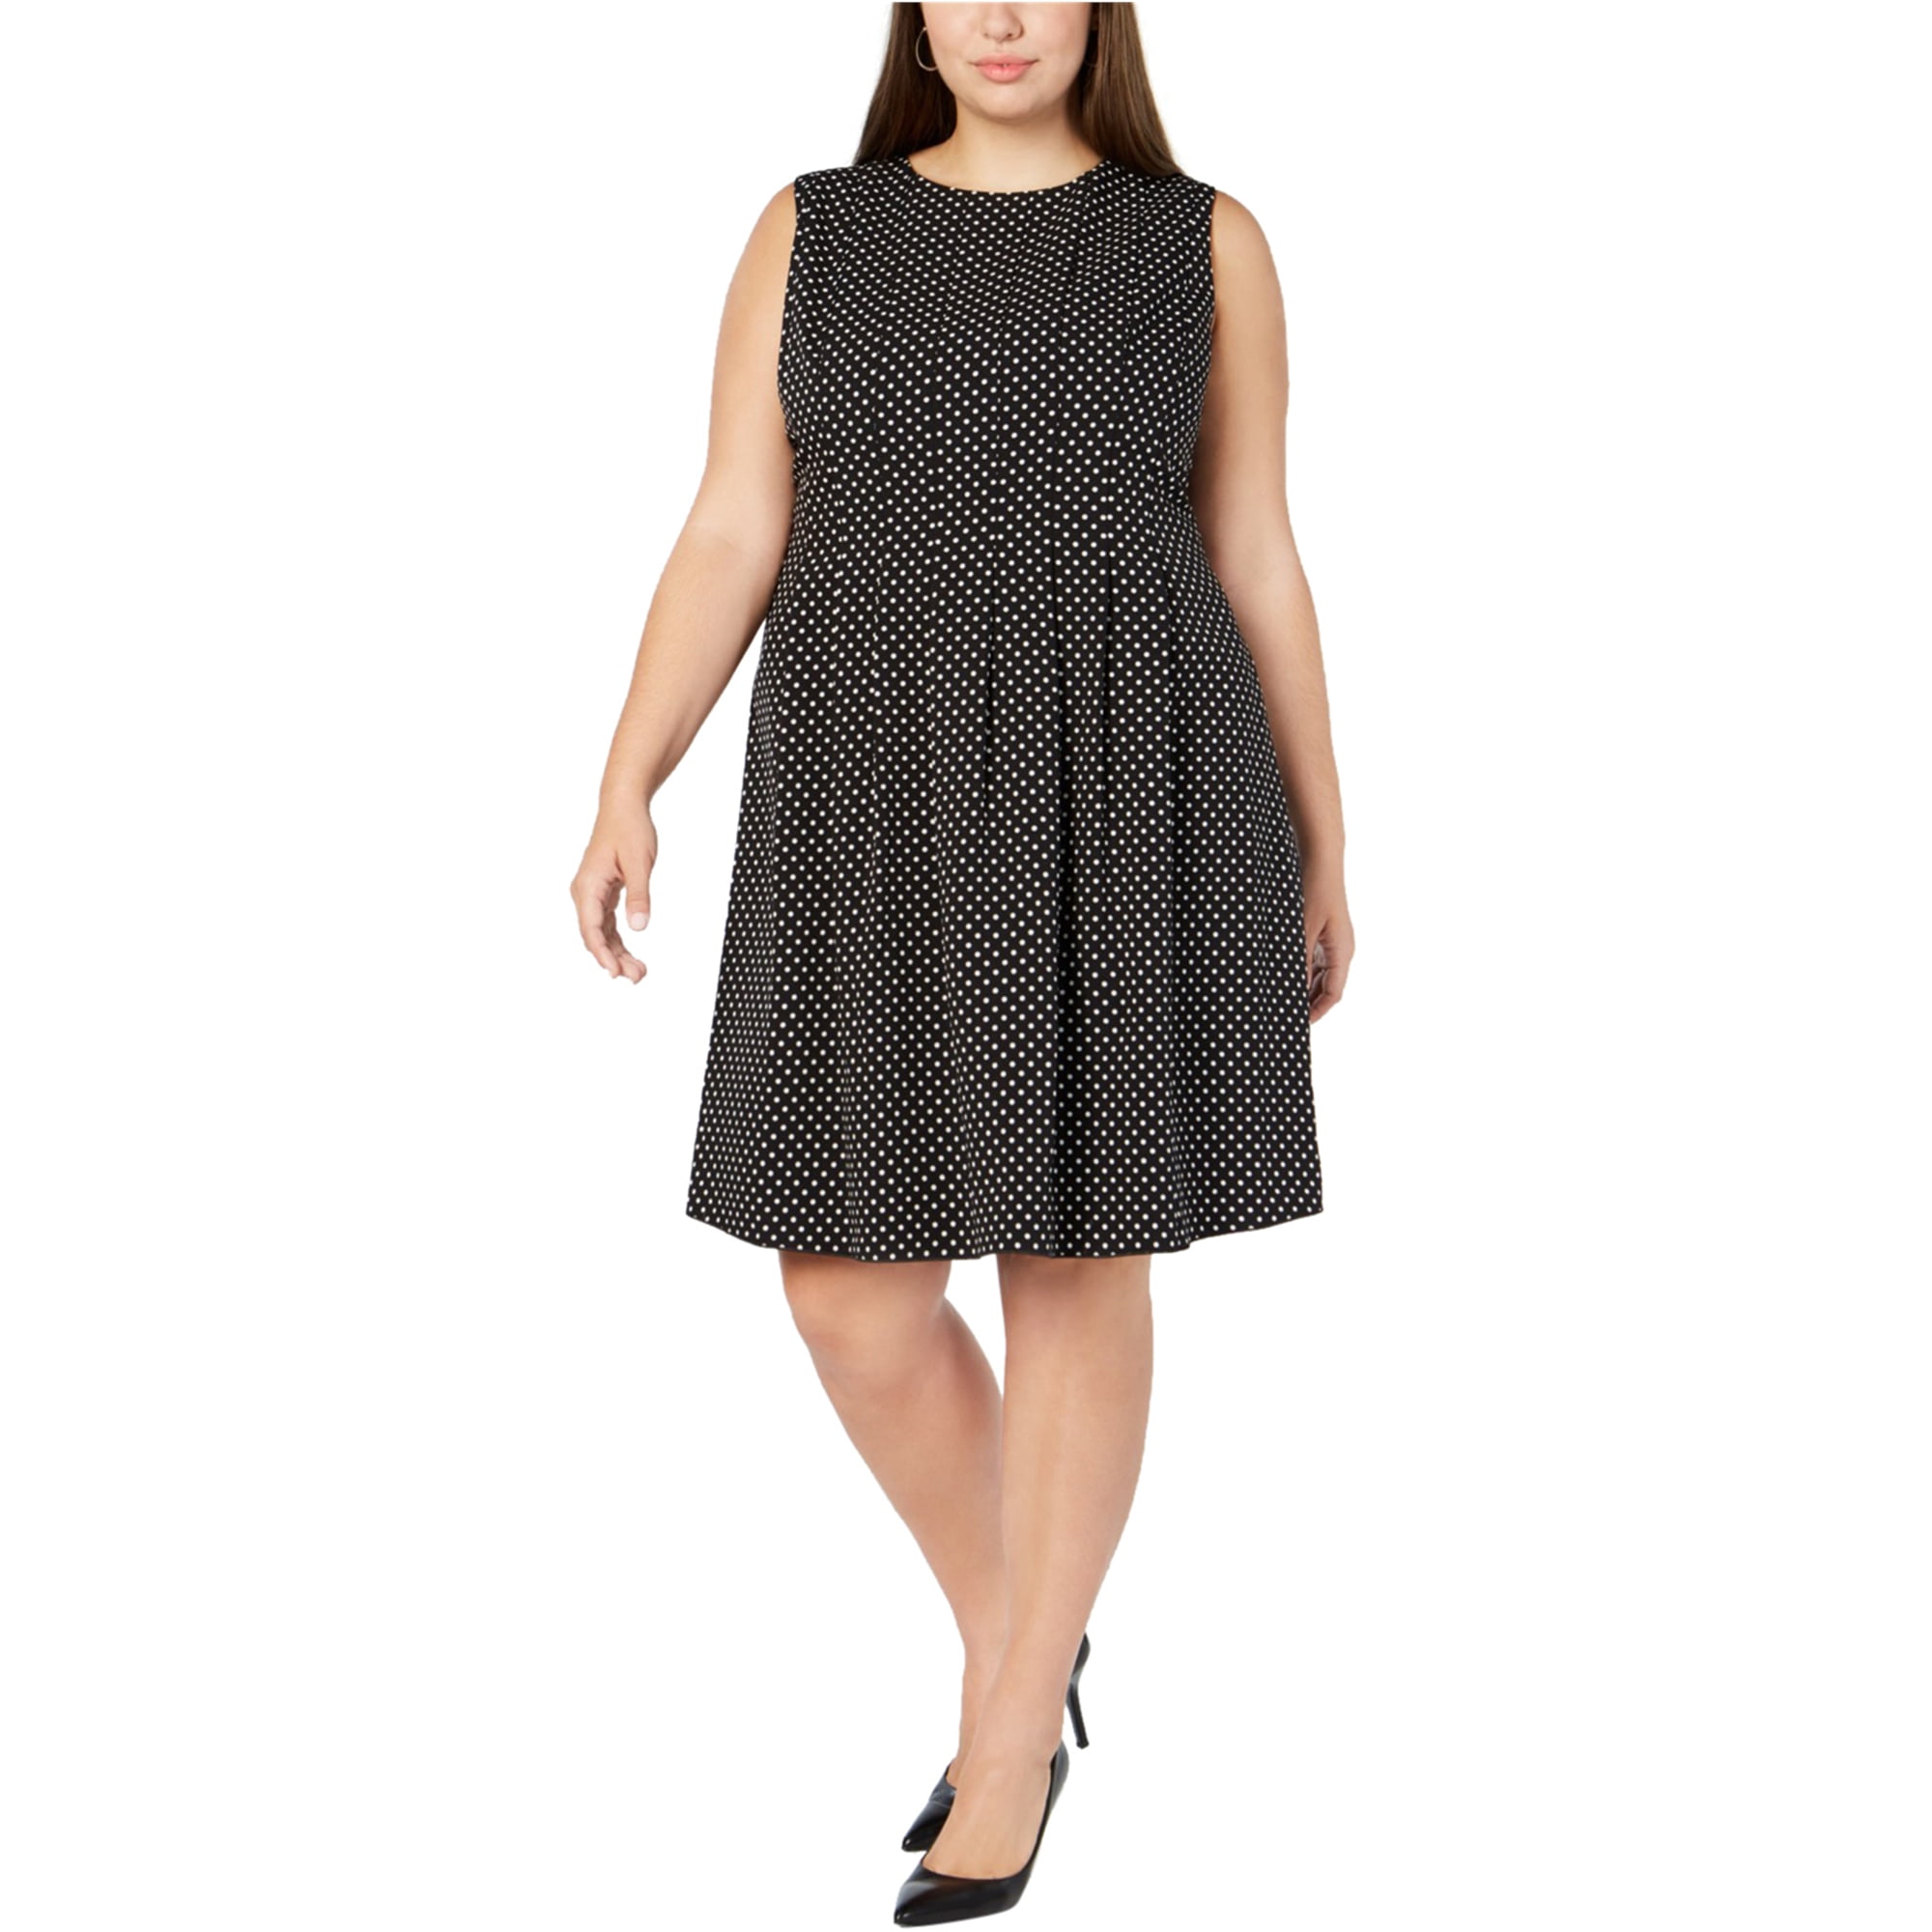 Anne Klein Womens Polka Dot Fit & Flare Dress, Black, 20W - Walmart.com